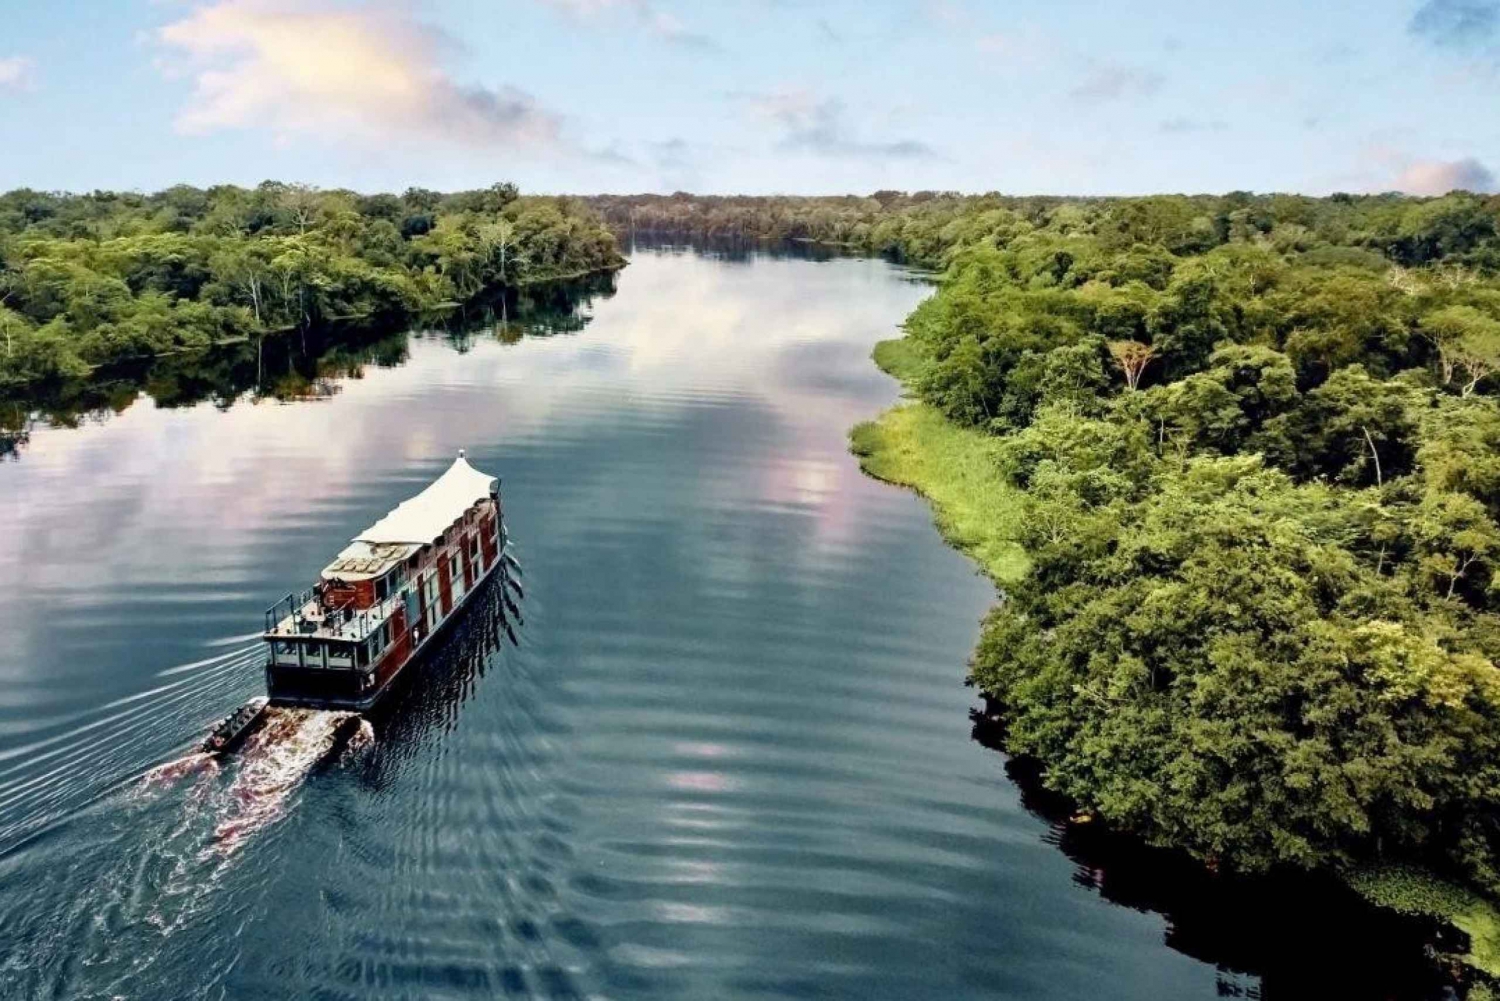 Excursion to the Amazon River